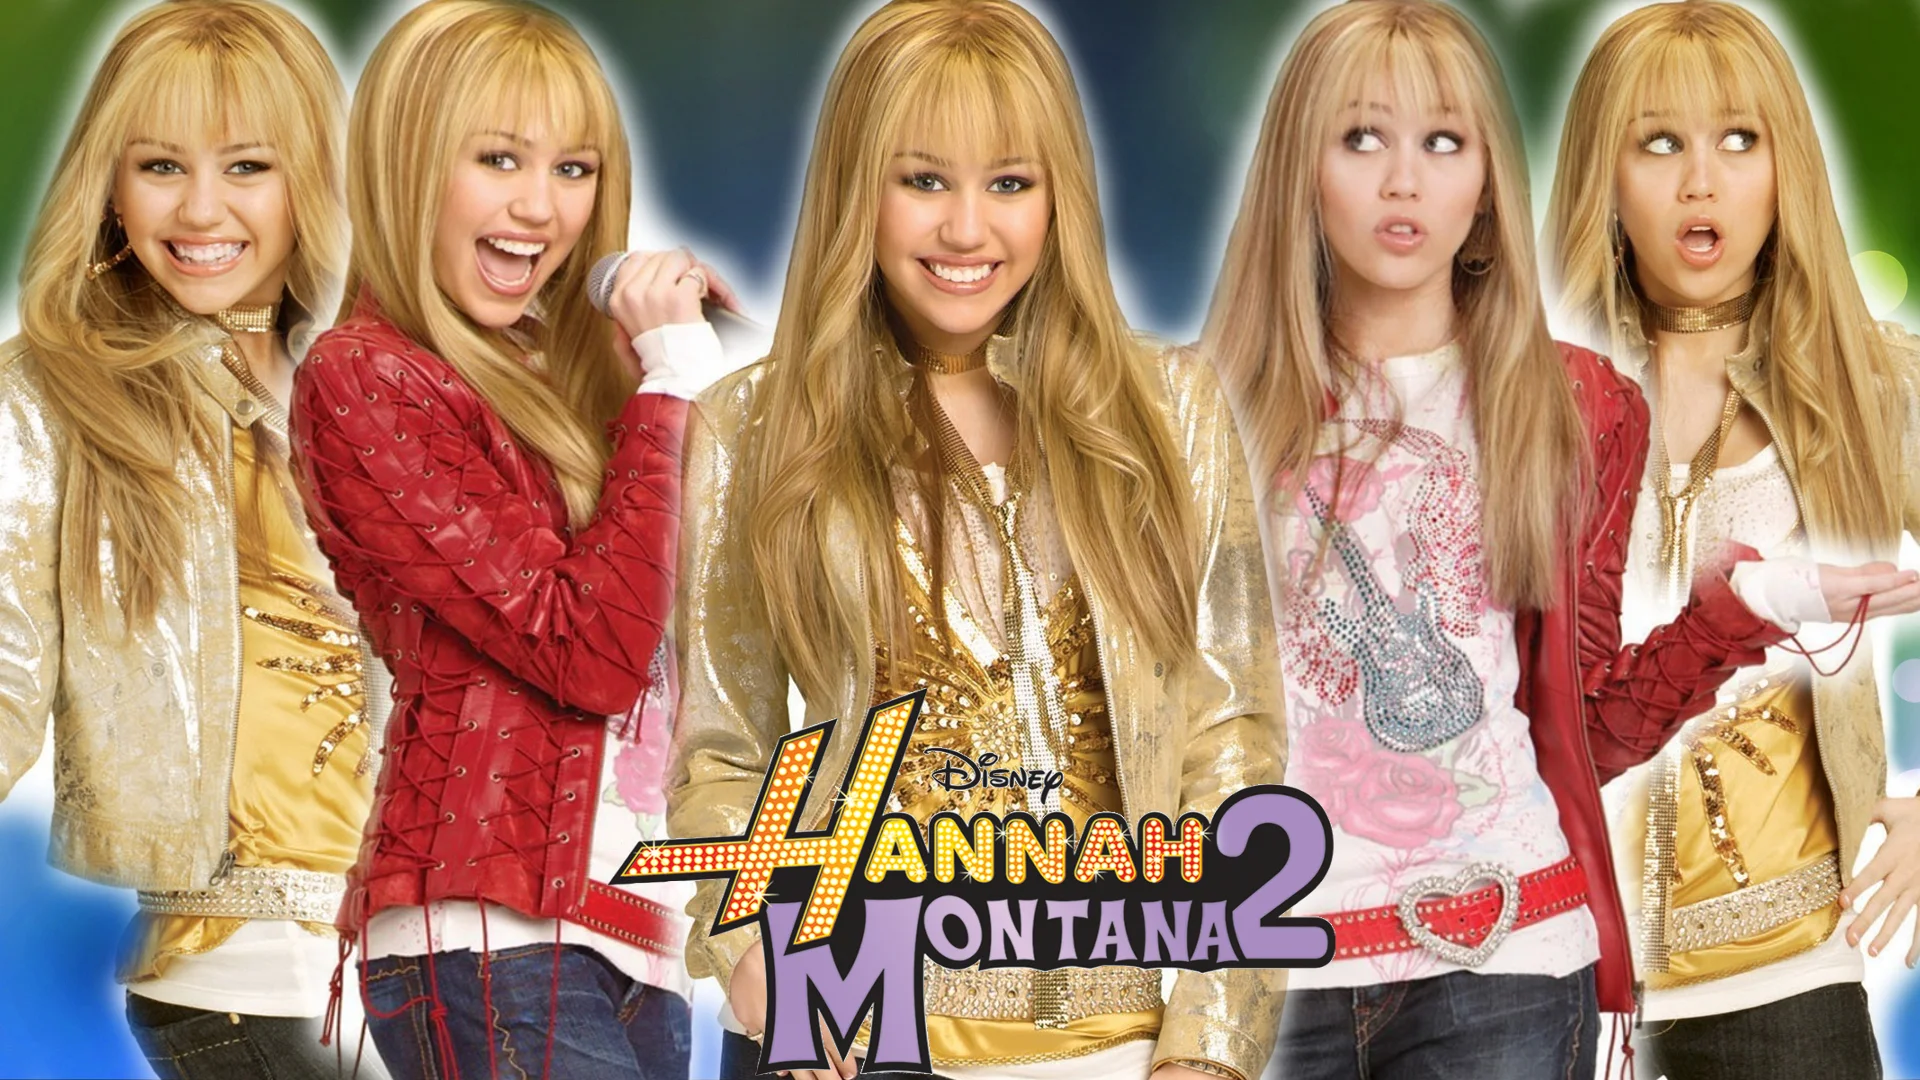 We Got The Party With Us lyrics Hannah Montana 2 Meet Miley Cyrus